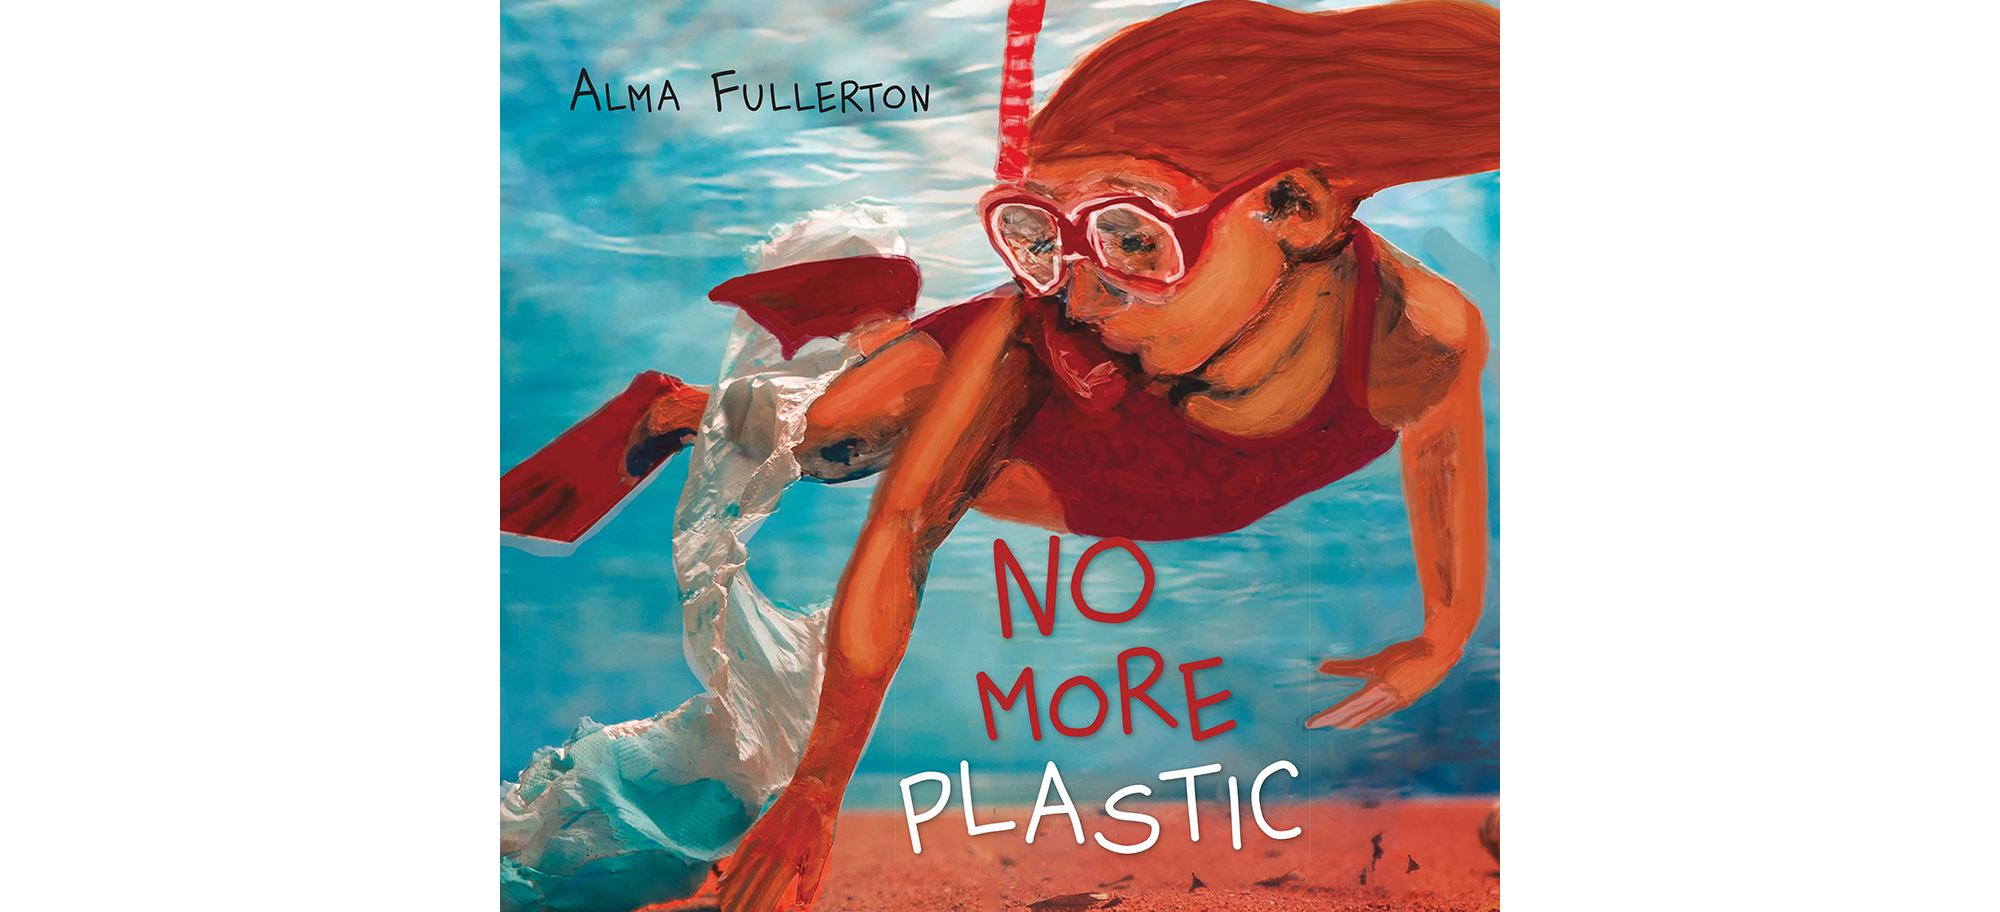 The cover of Alma Fullerton's No More Plastic